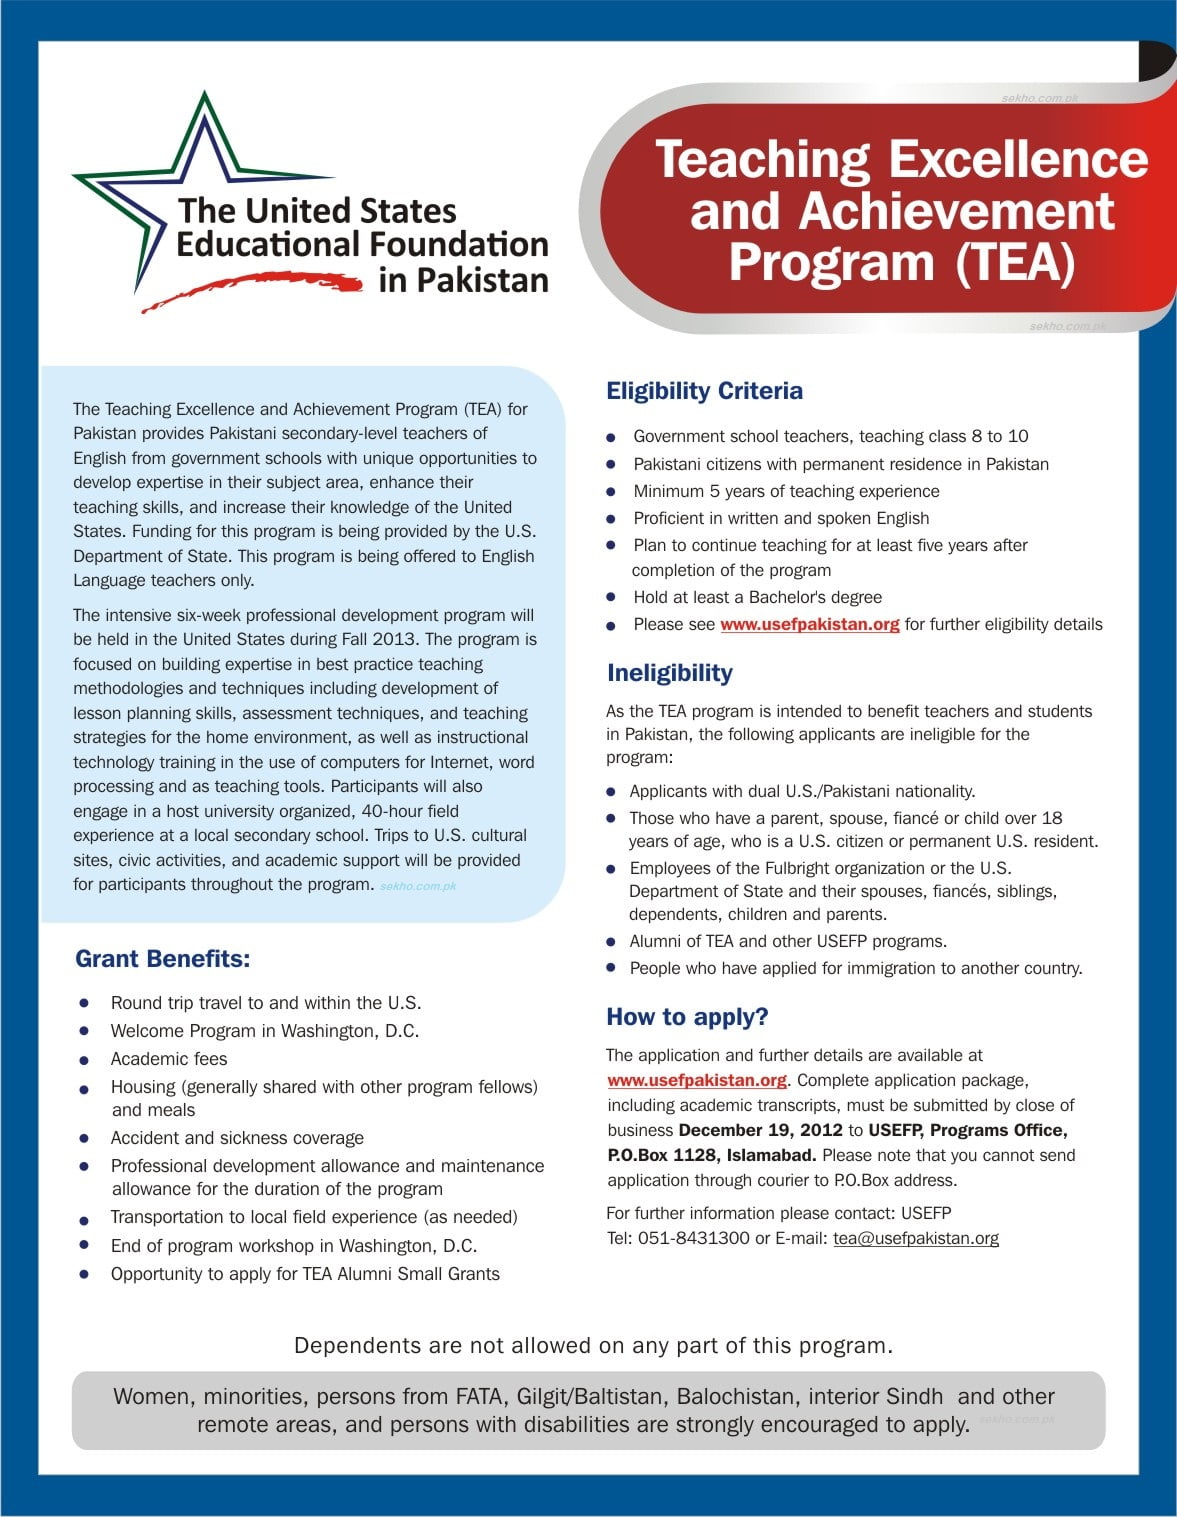 Teaching Excellence And Achievement (Tea) Program 2013